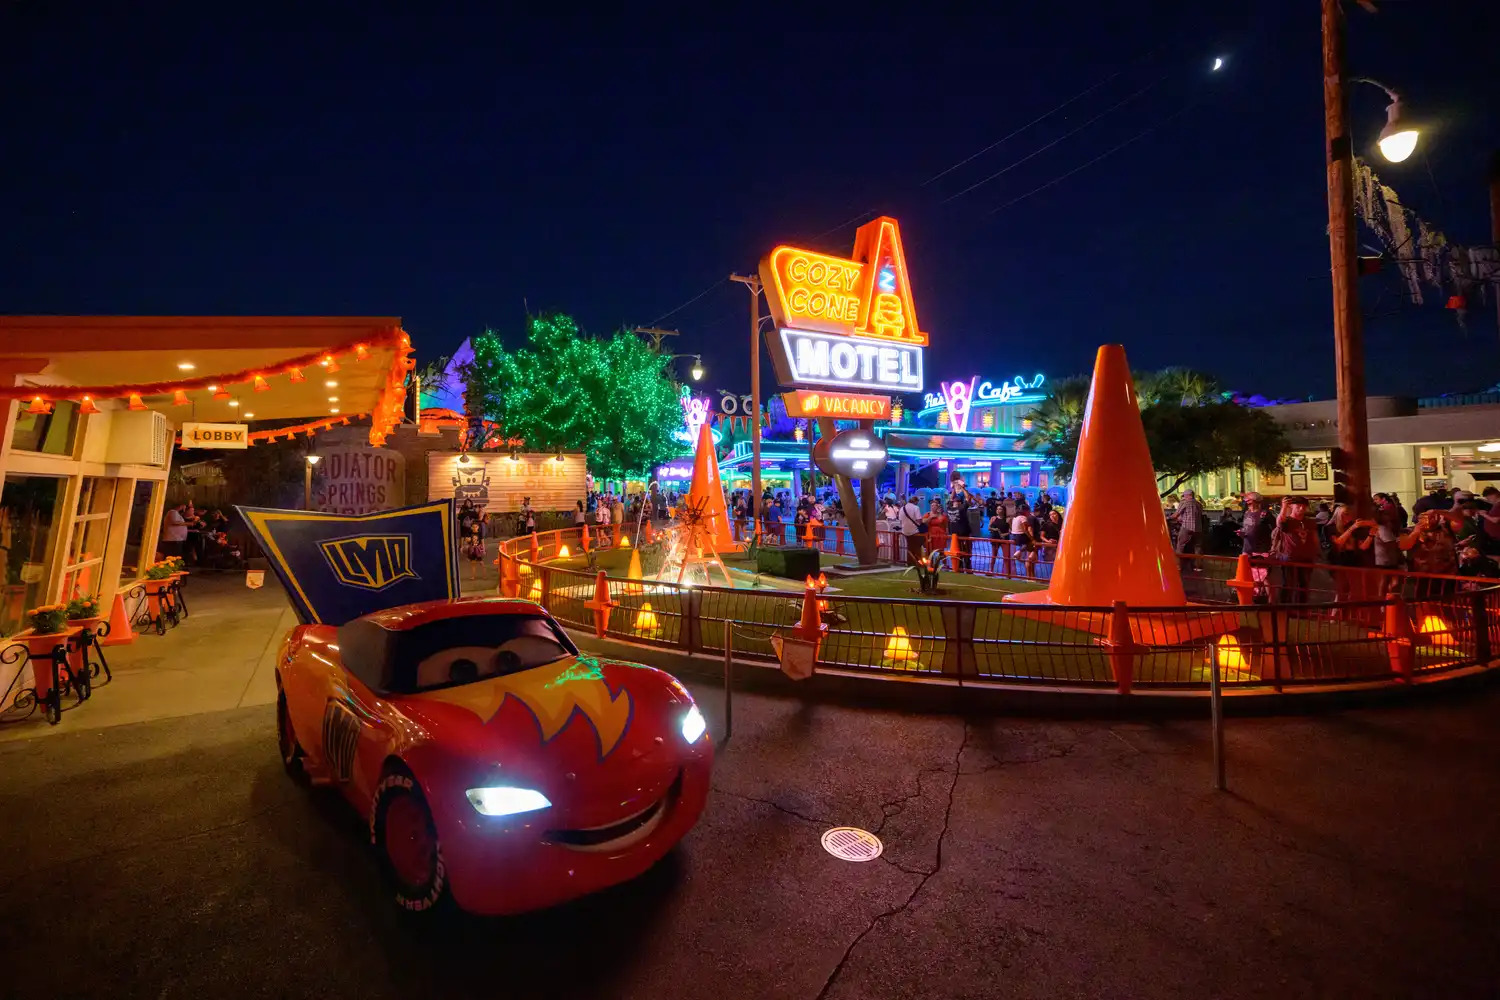 Halloween Time at the Disneyland Resort – Cars Land Haul-O-Ween